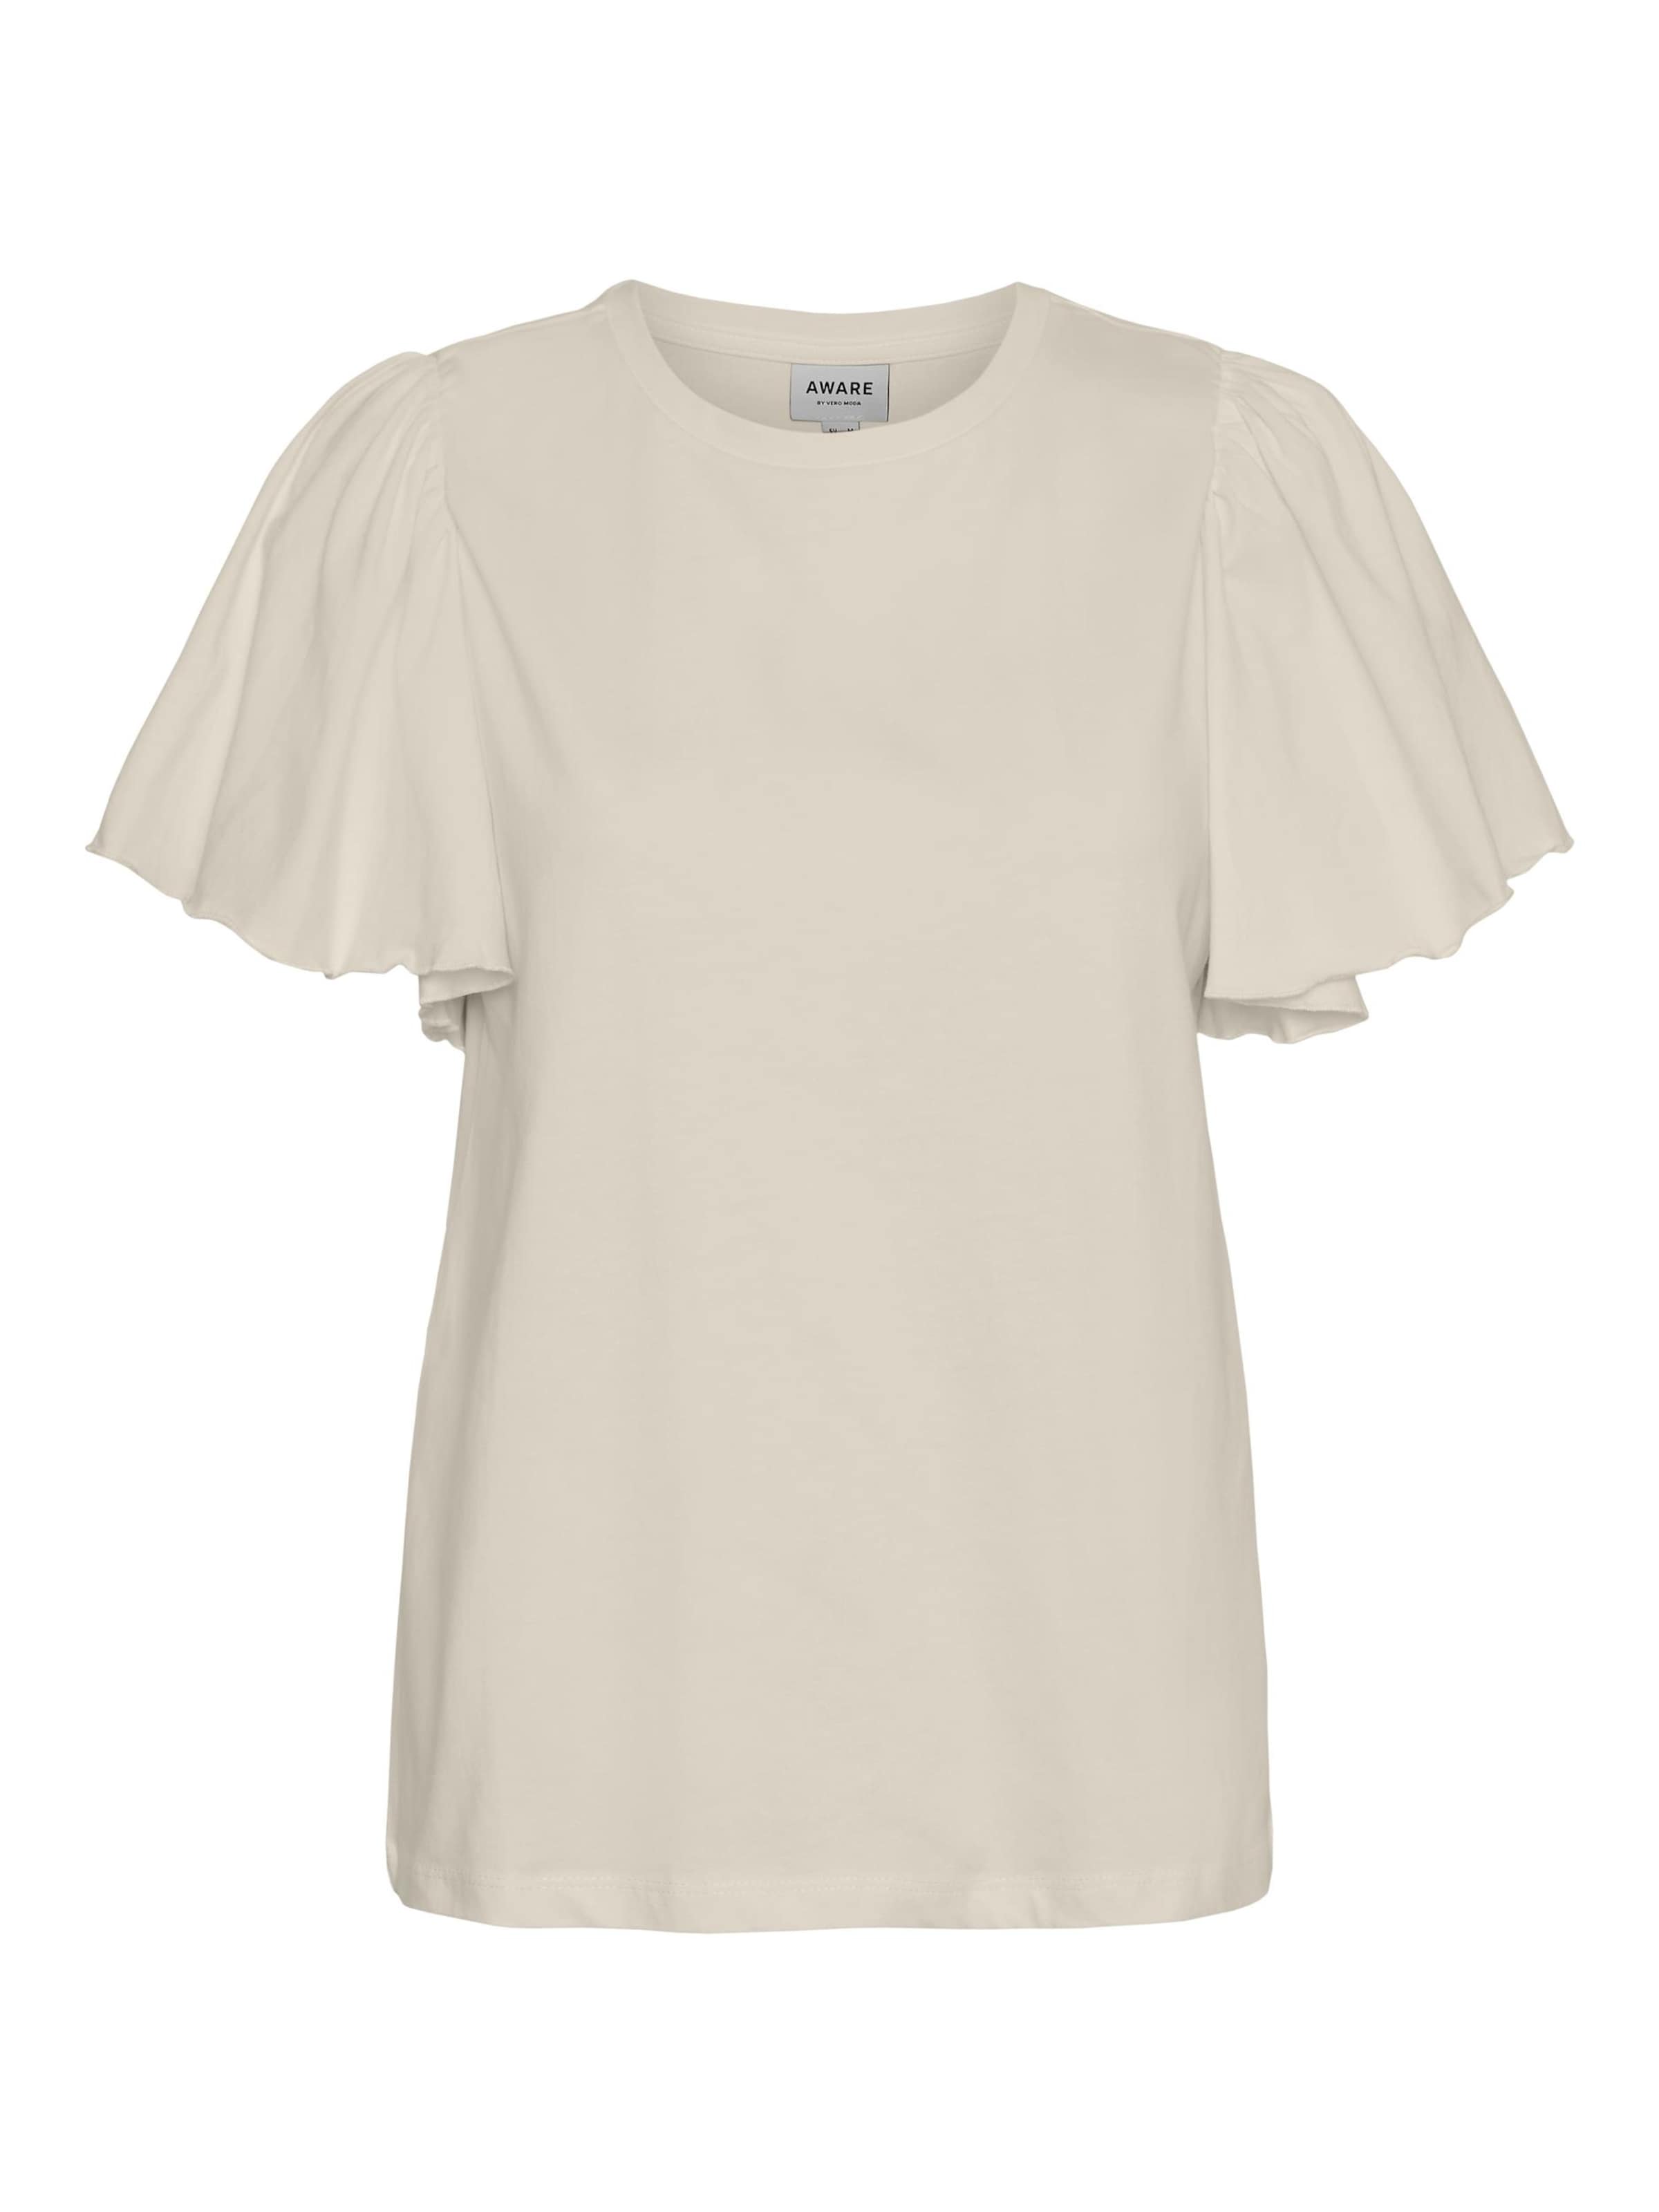 Vero Moda Aware T-Shirt L Blanc